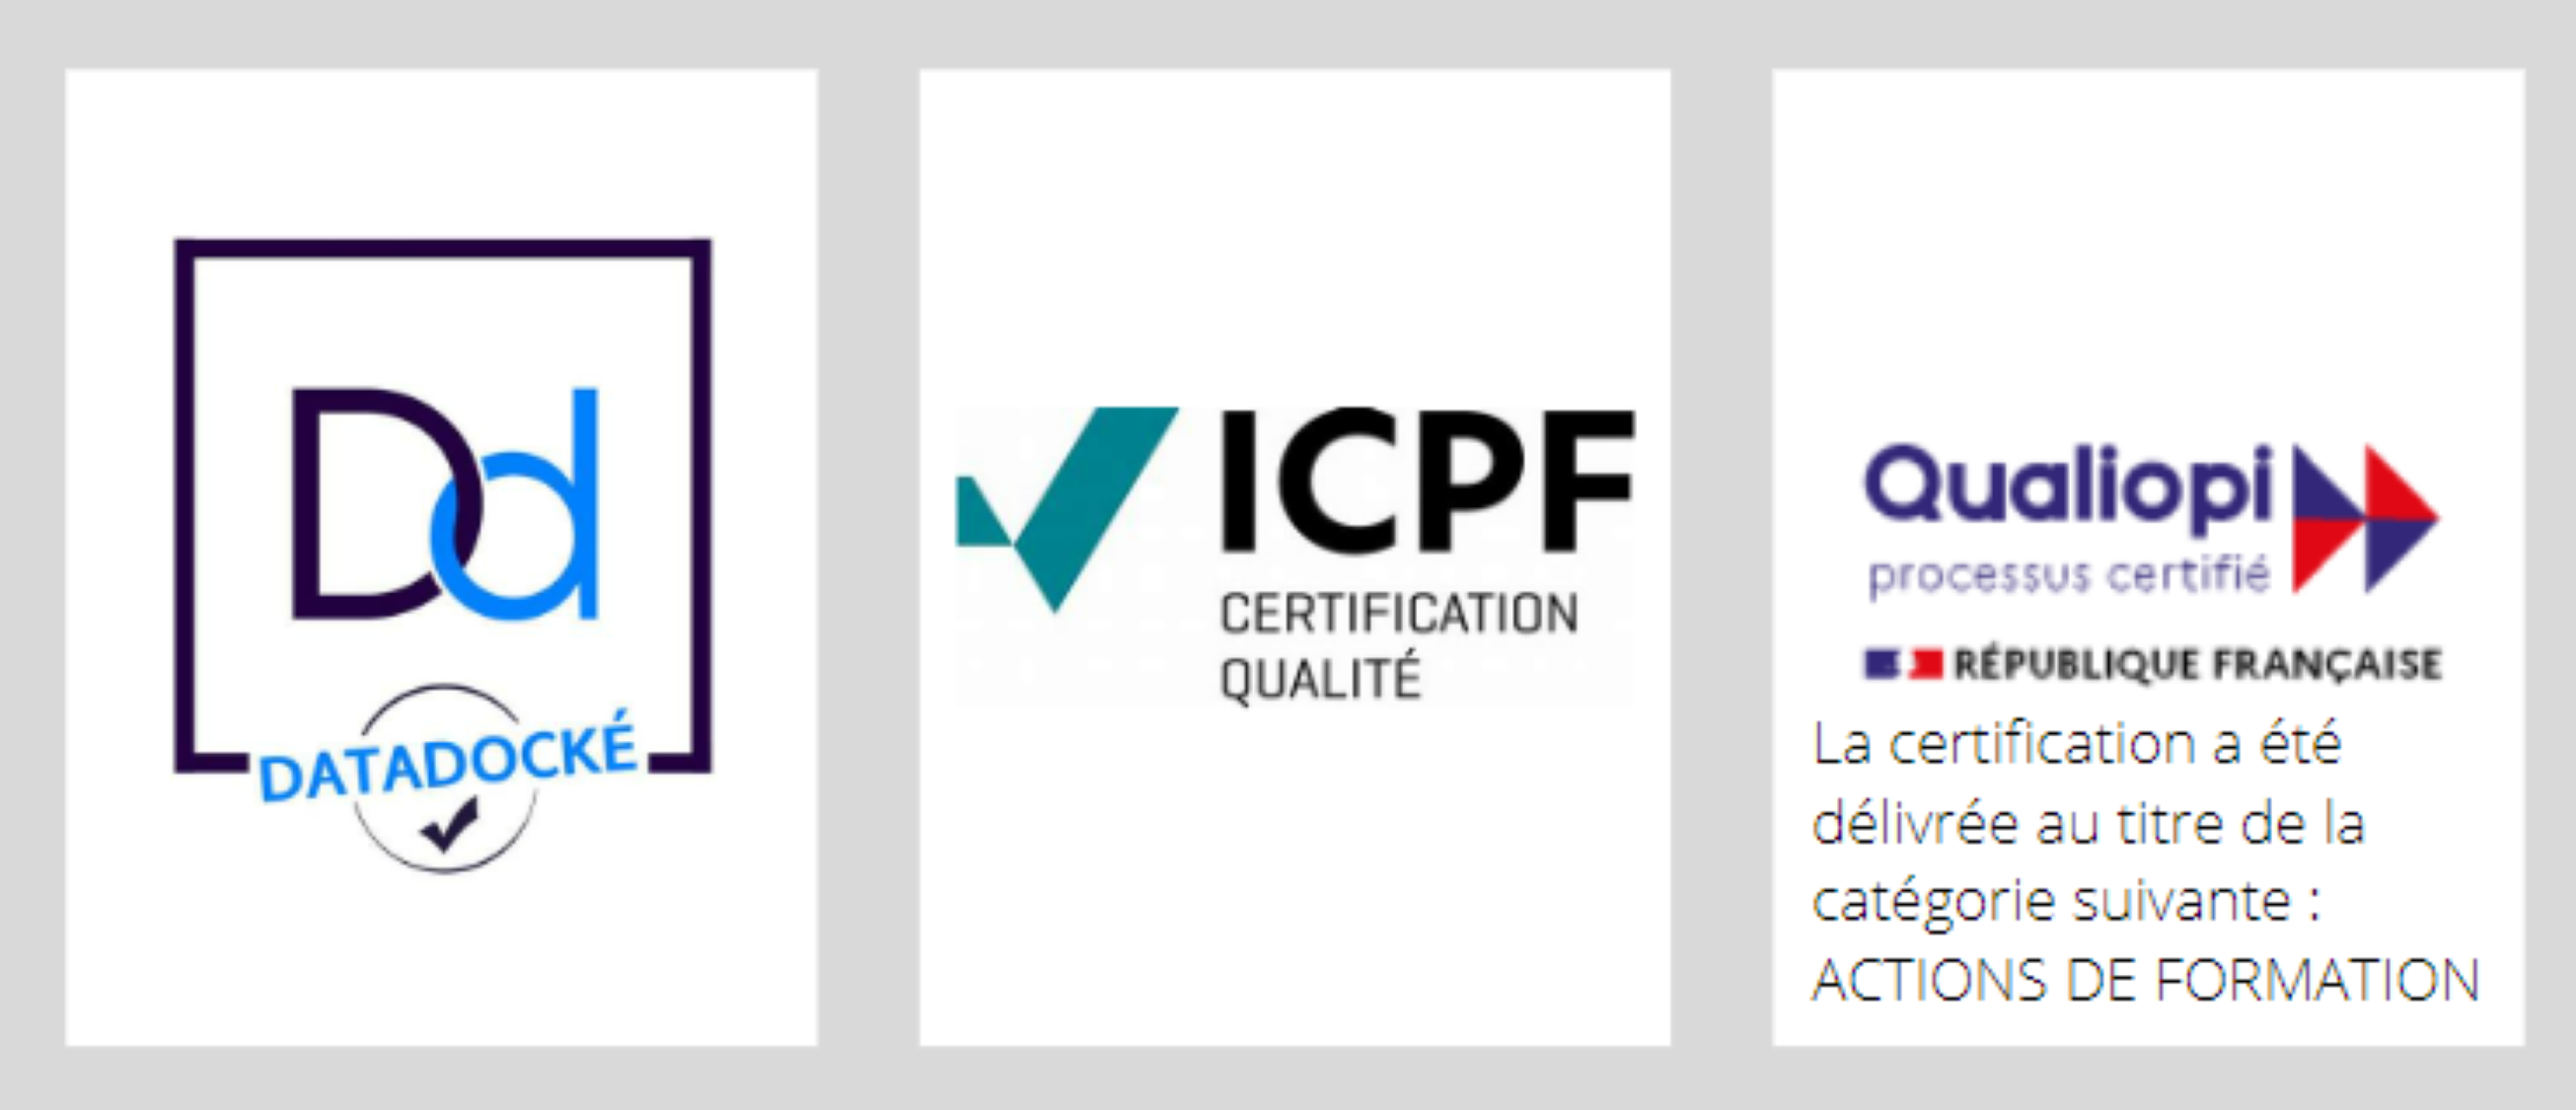 ok_certifications_datadock_icpf_qualiopi_site_mlc